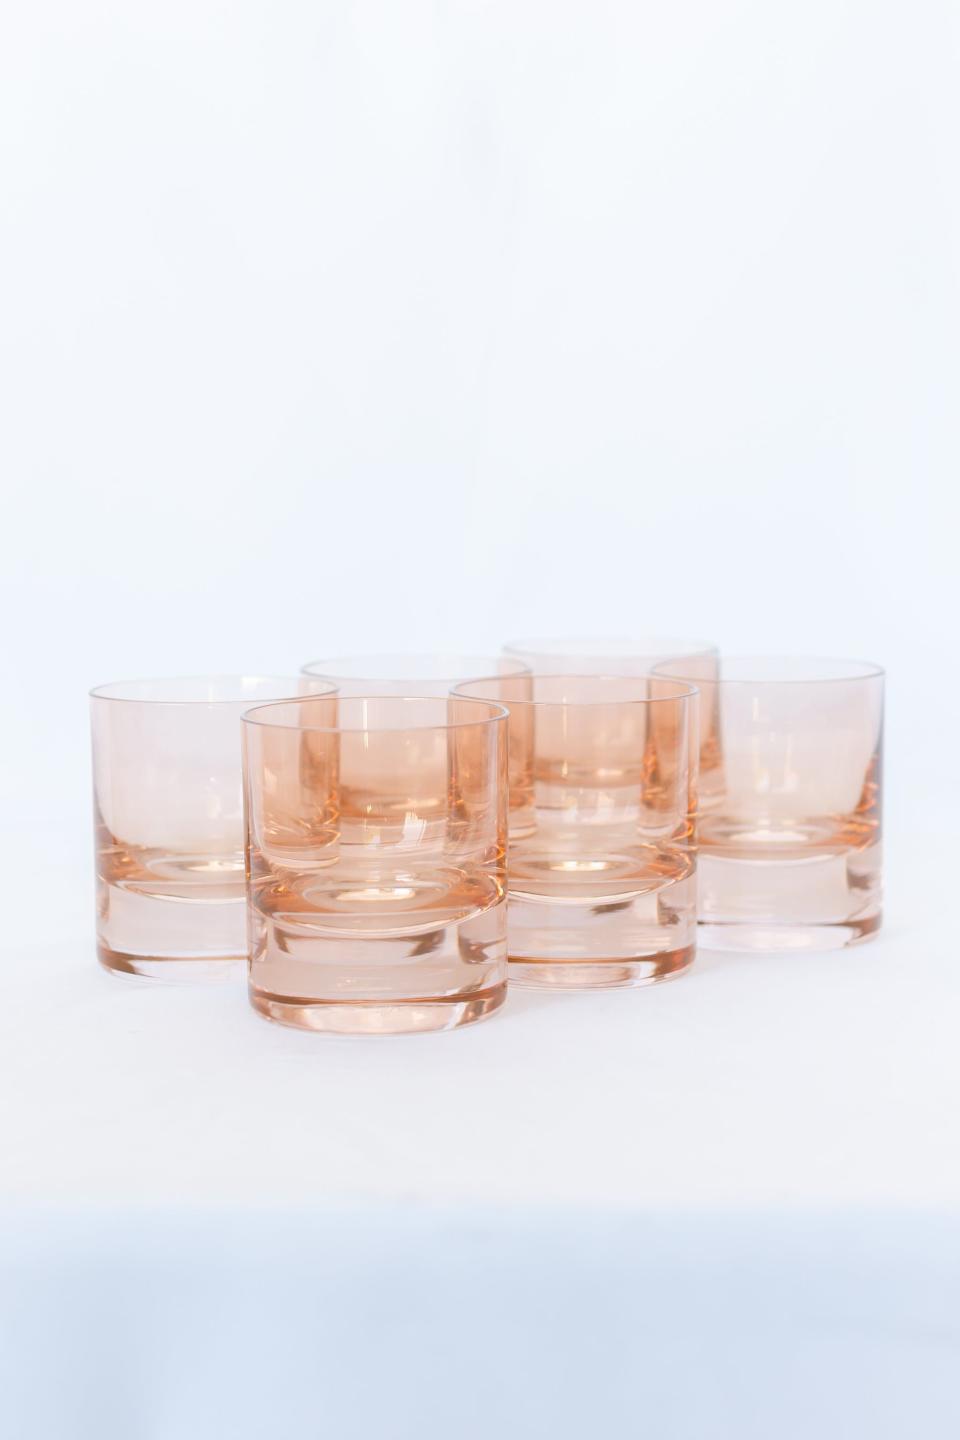 41) Estelle Colored Rocks Glass - Set of 6 {Blush Pink}